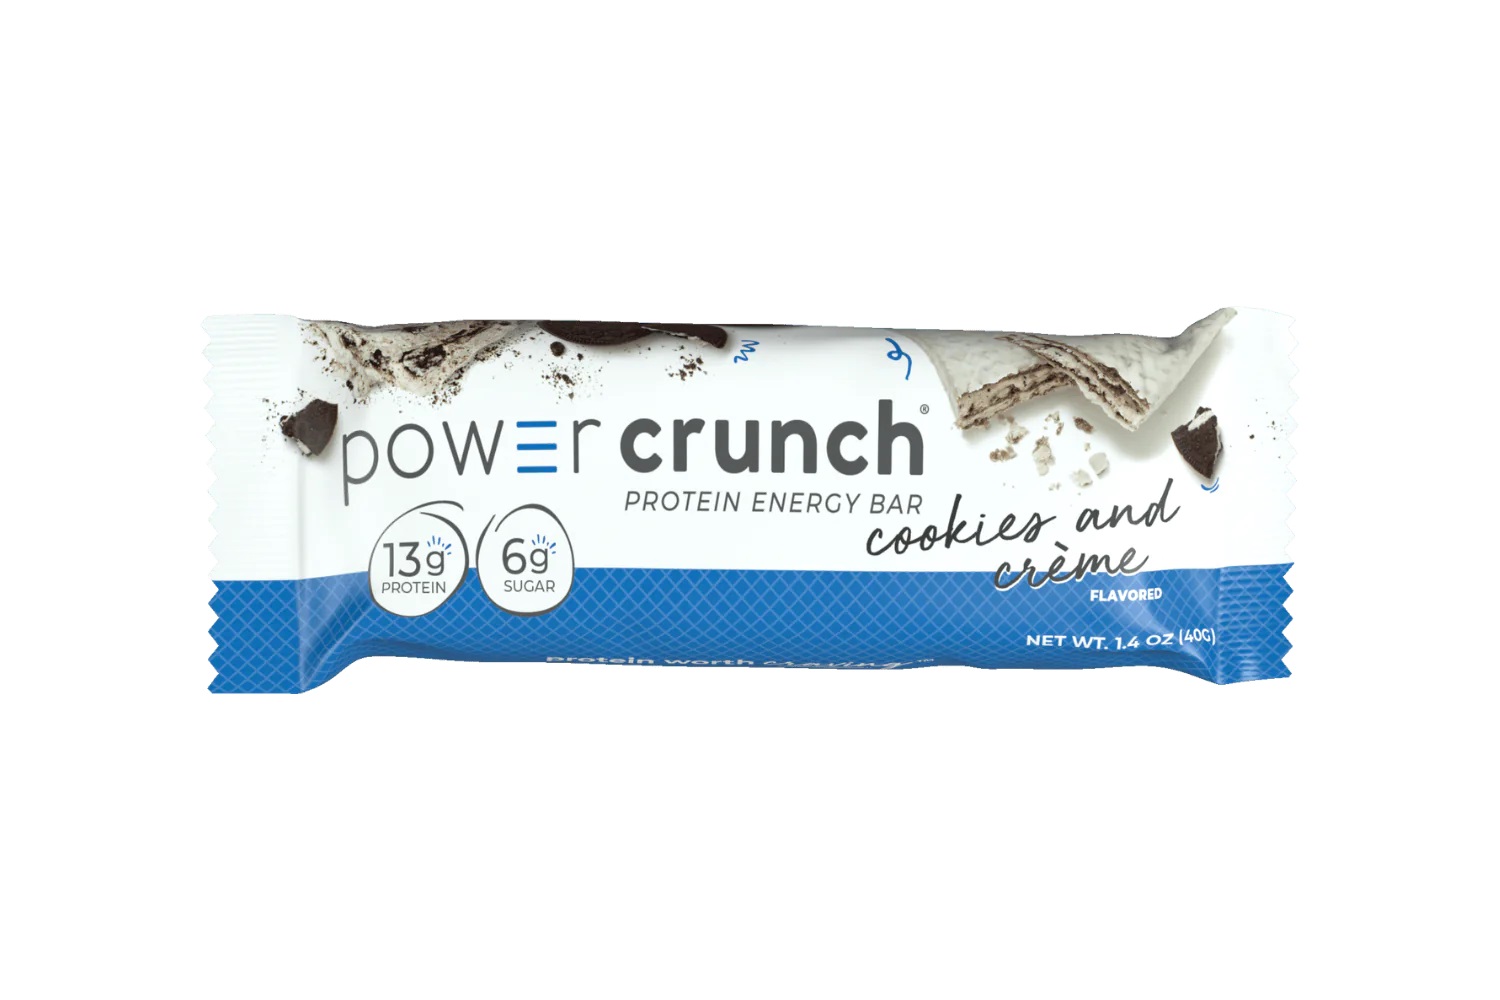 11-power-crunch-bar-nutrition-facts